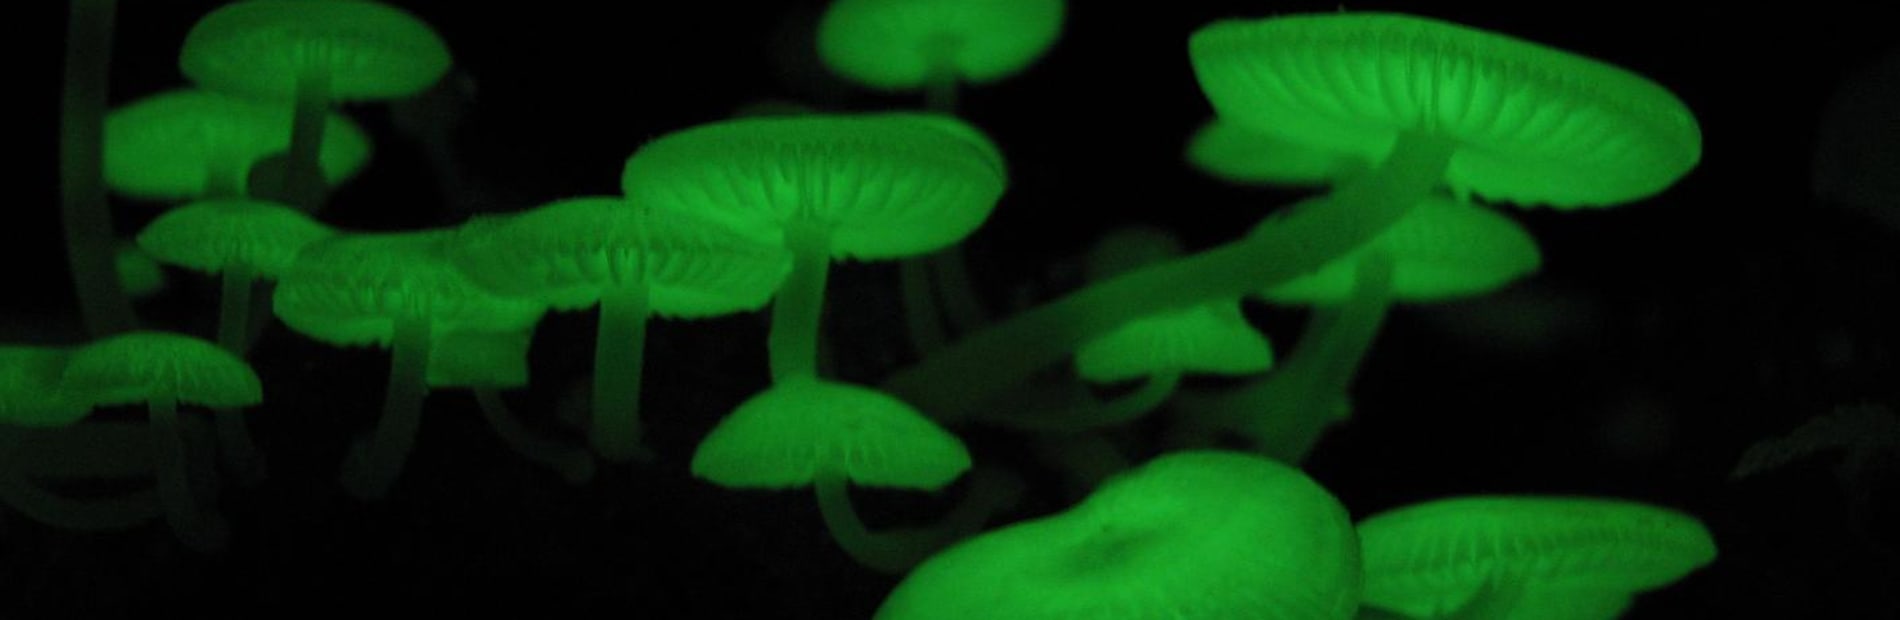 Green mushrooms, bioluminescent in the dark